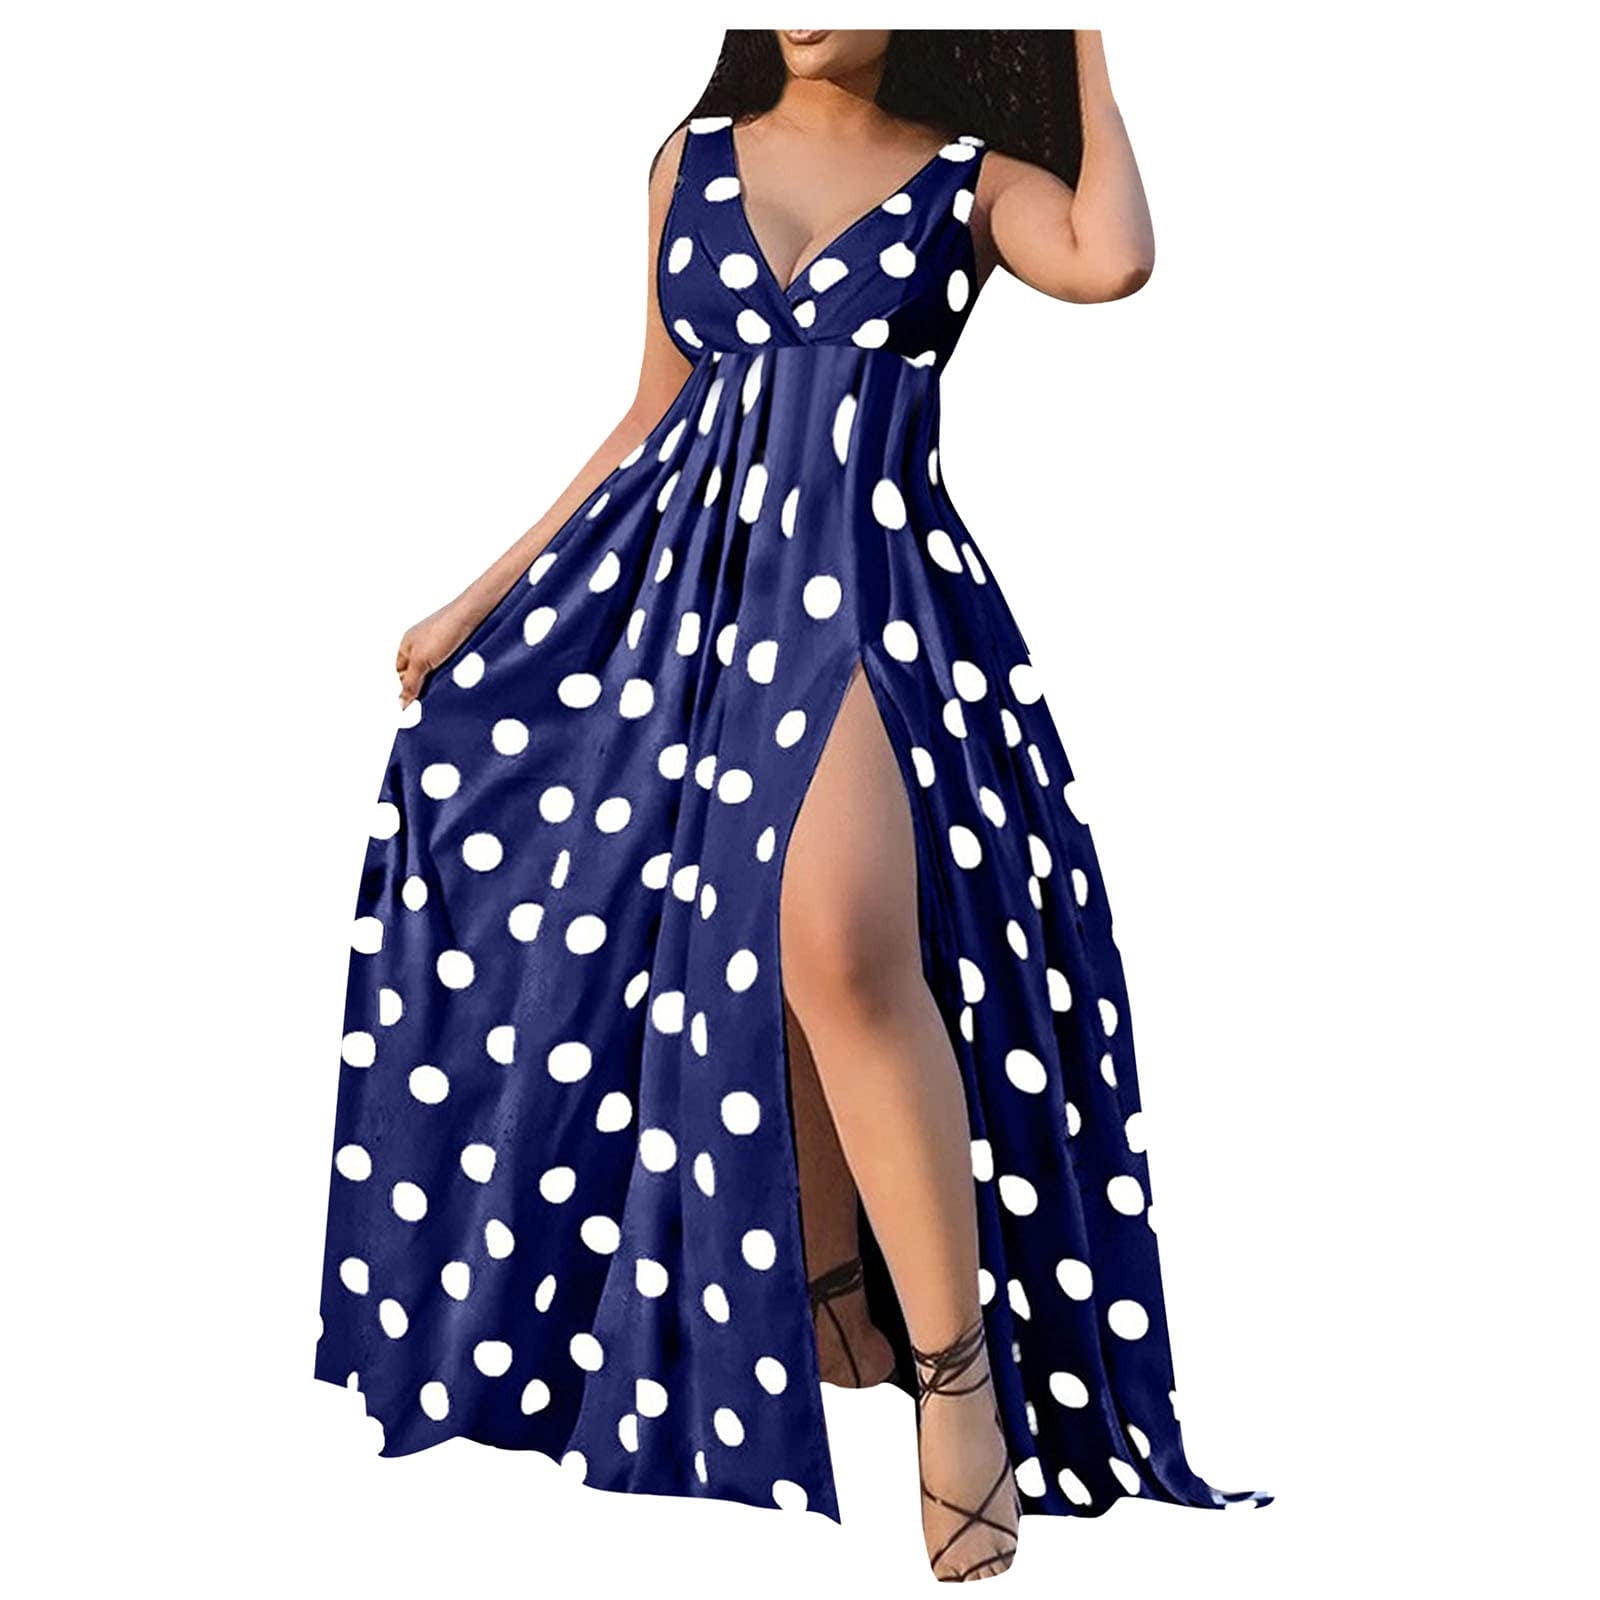 Gofodn Dresses for Women Plus Size Summer Retro Printing Casual Sleeveless Loose Beach Long Dress 